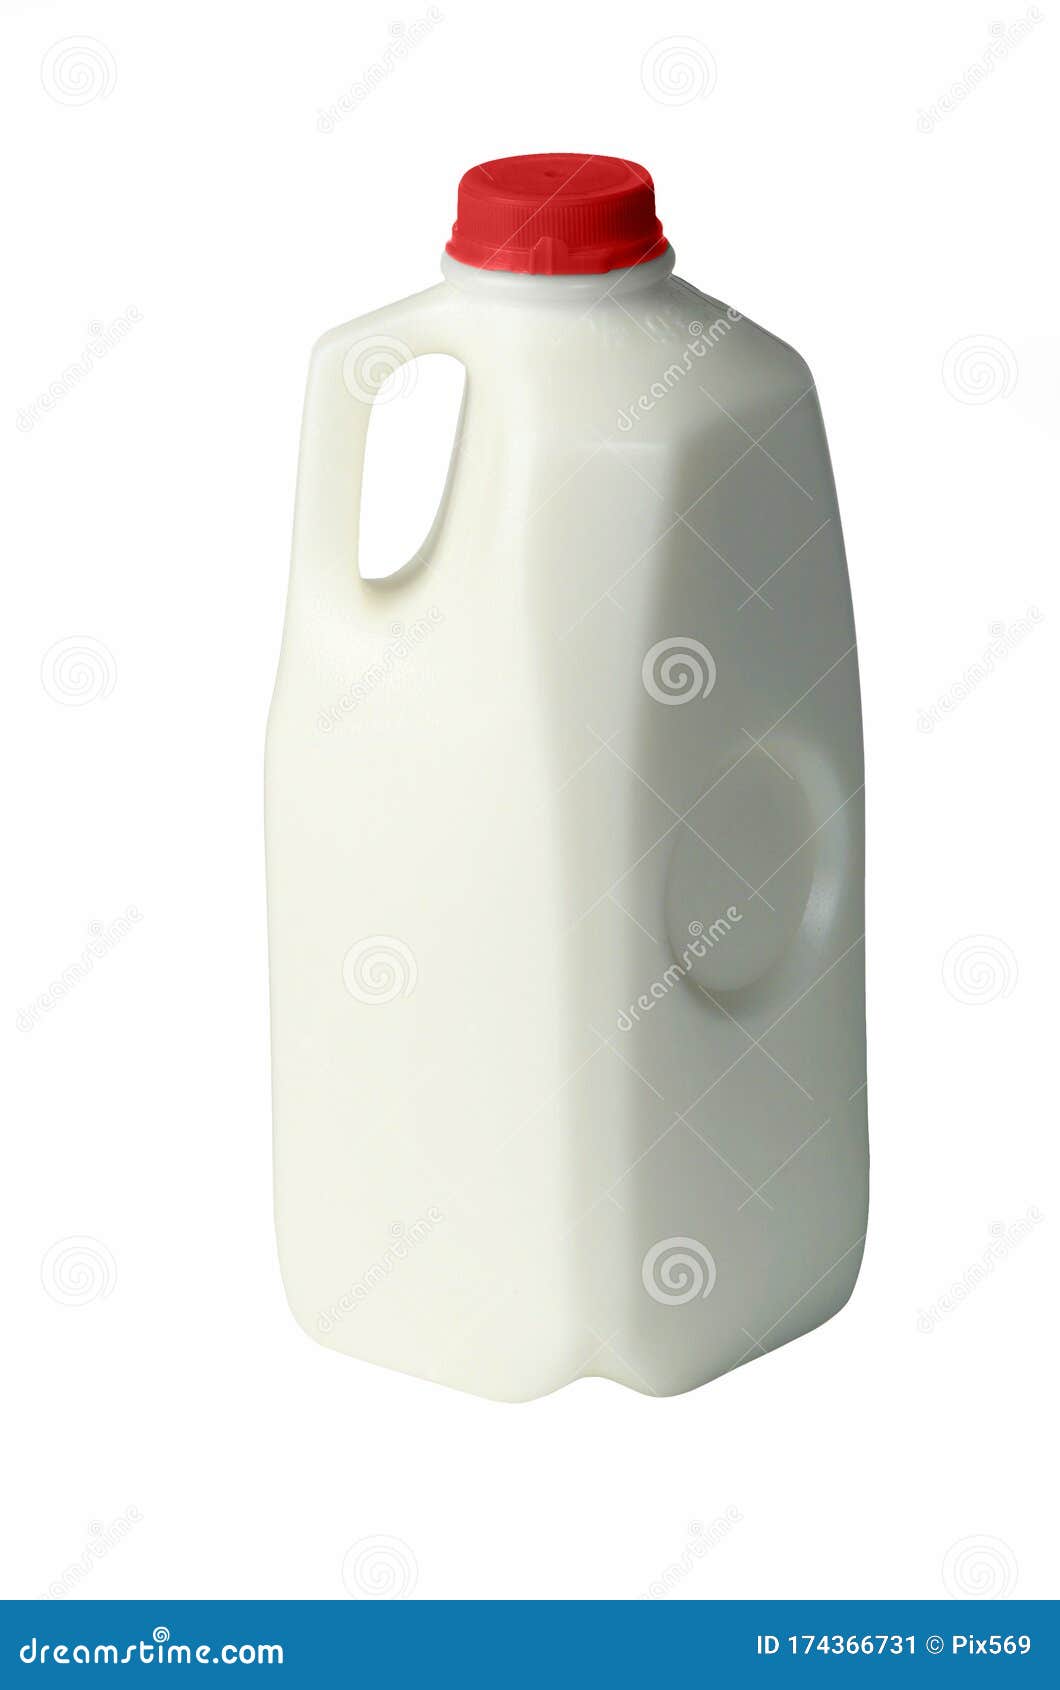 https://thumbs.dreamstime.com/z/one-half-gallon-jug-whole-milk-red-cap-united-states-cap-color-indicates-what-kind-milk-bottle-174366731.jpg